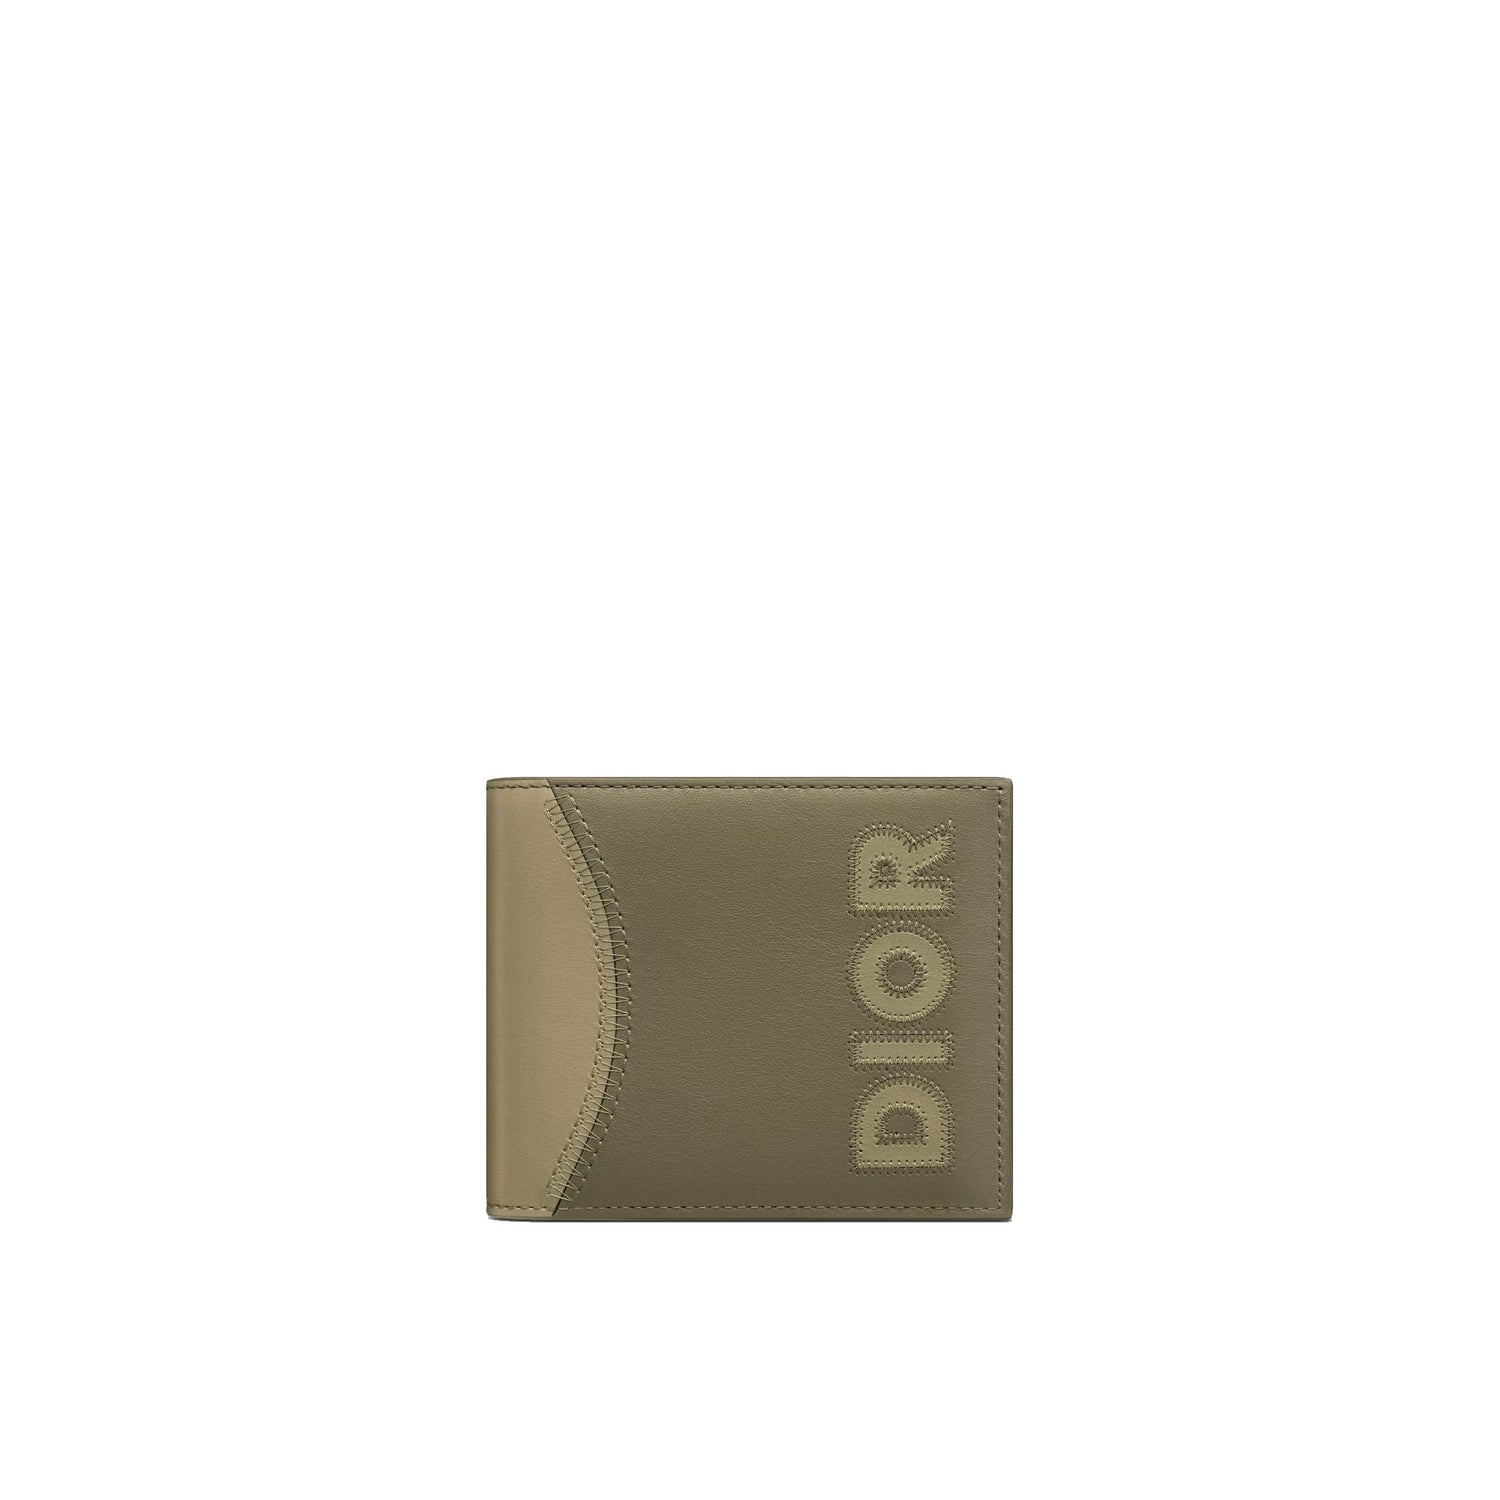 Dior Men's Leather Wallet